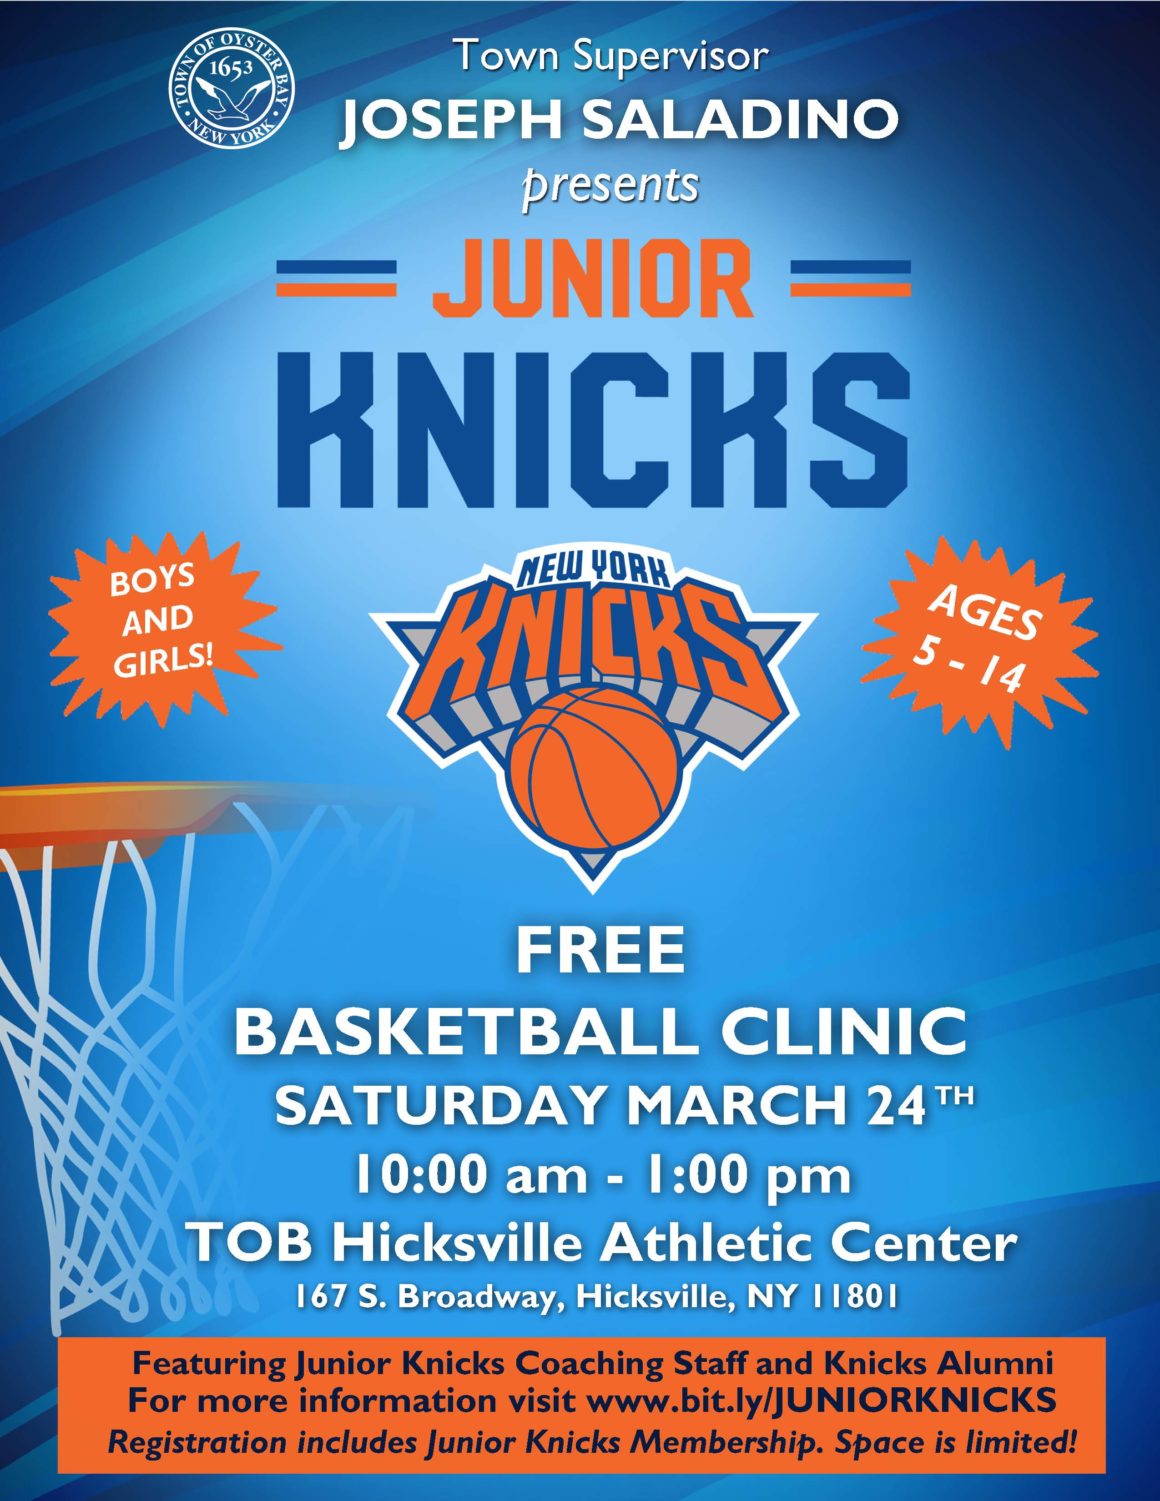 Saladino: Free Junior Knicks Basketball Clinic on Saturday March 24th